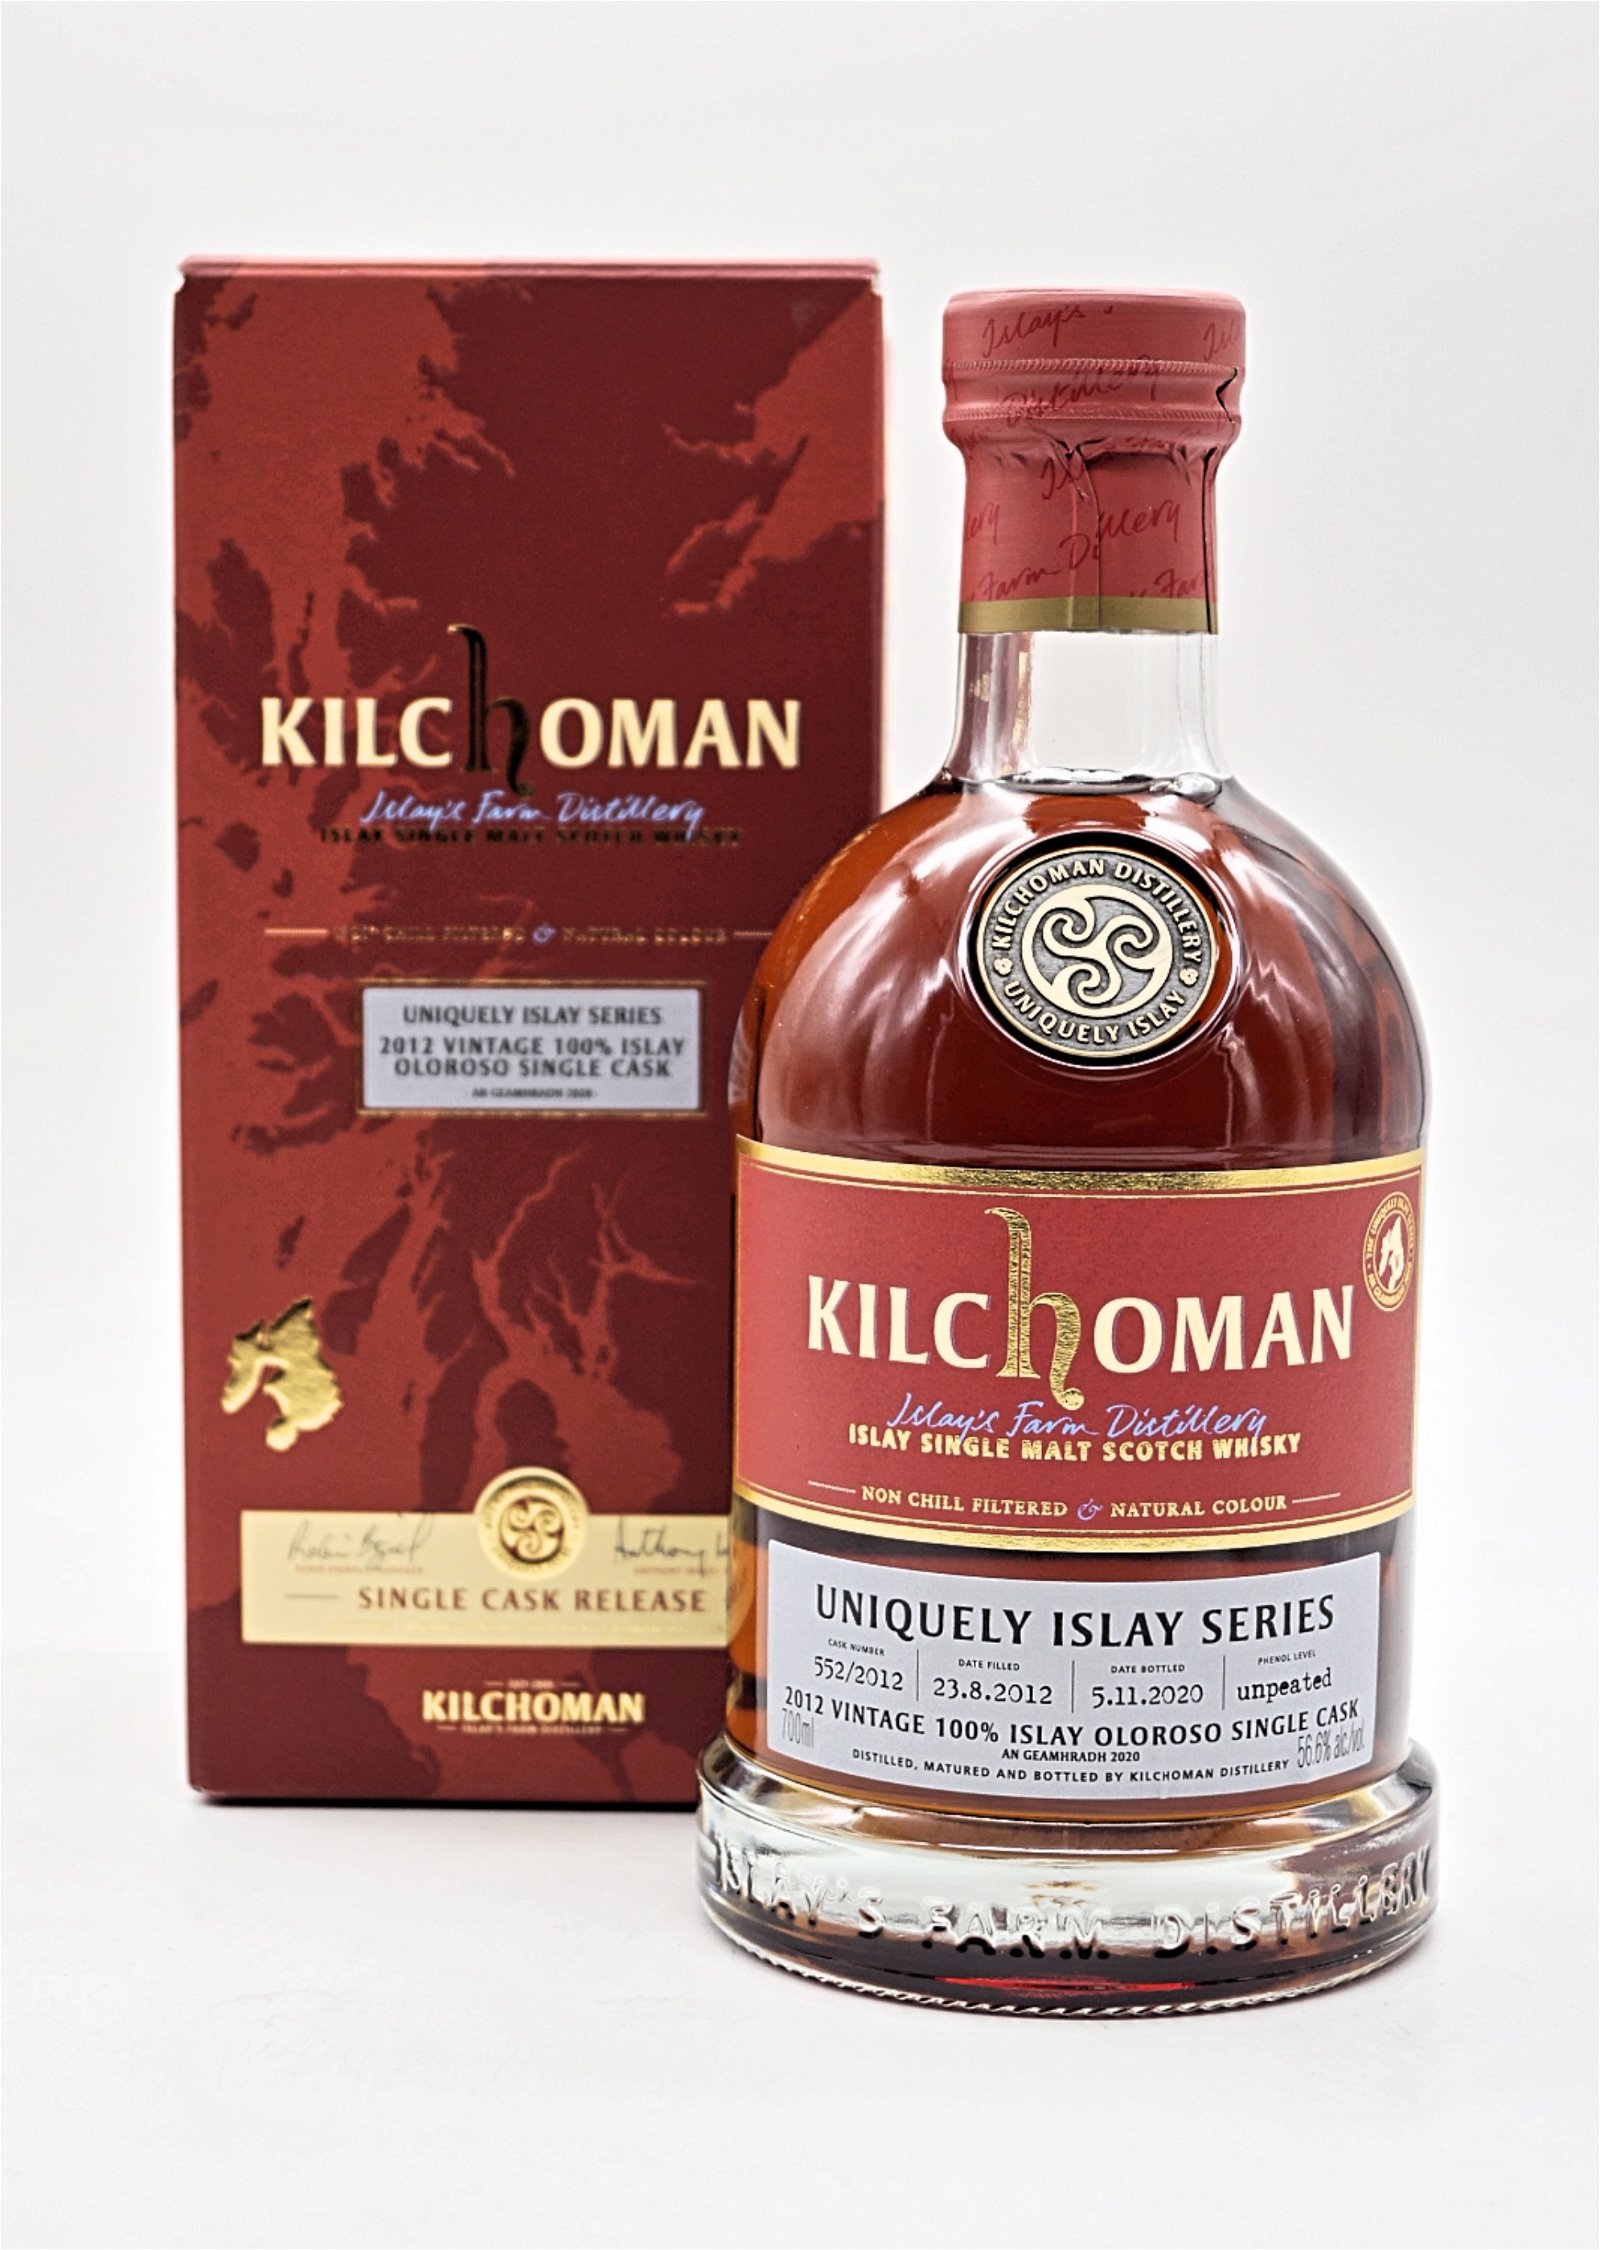 Kilchoman Uniquely Islay Series 2012 Vintage 100% Islay Oloroso Single Cask Single Malt Scotch Whisky